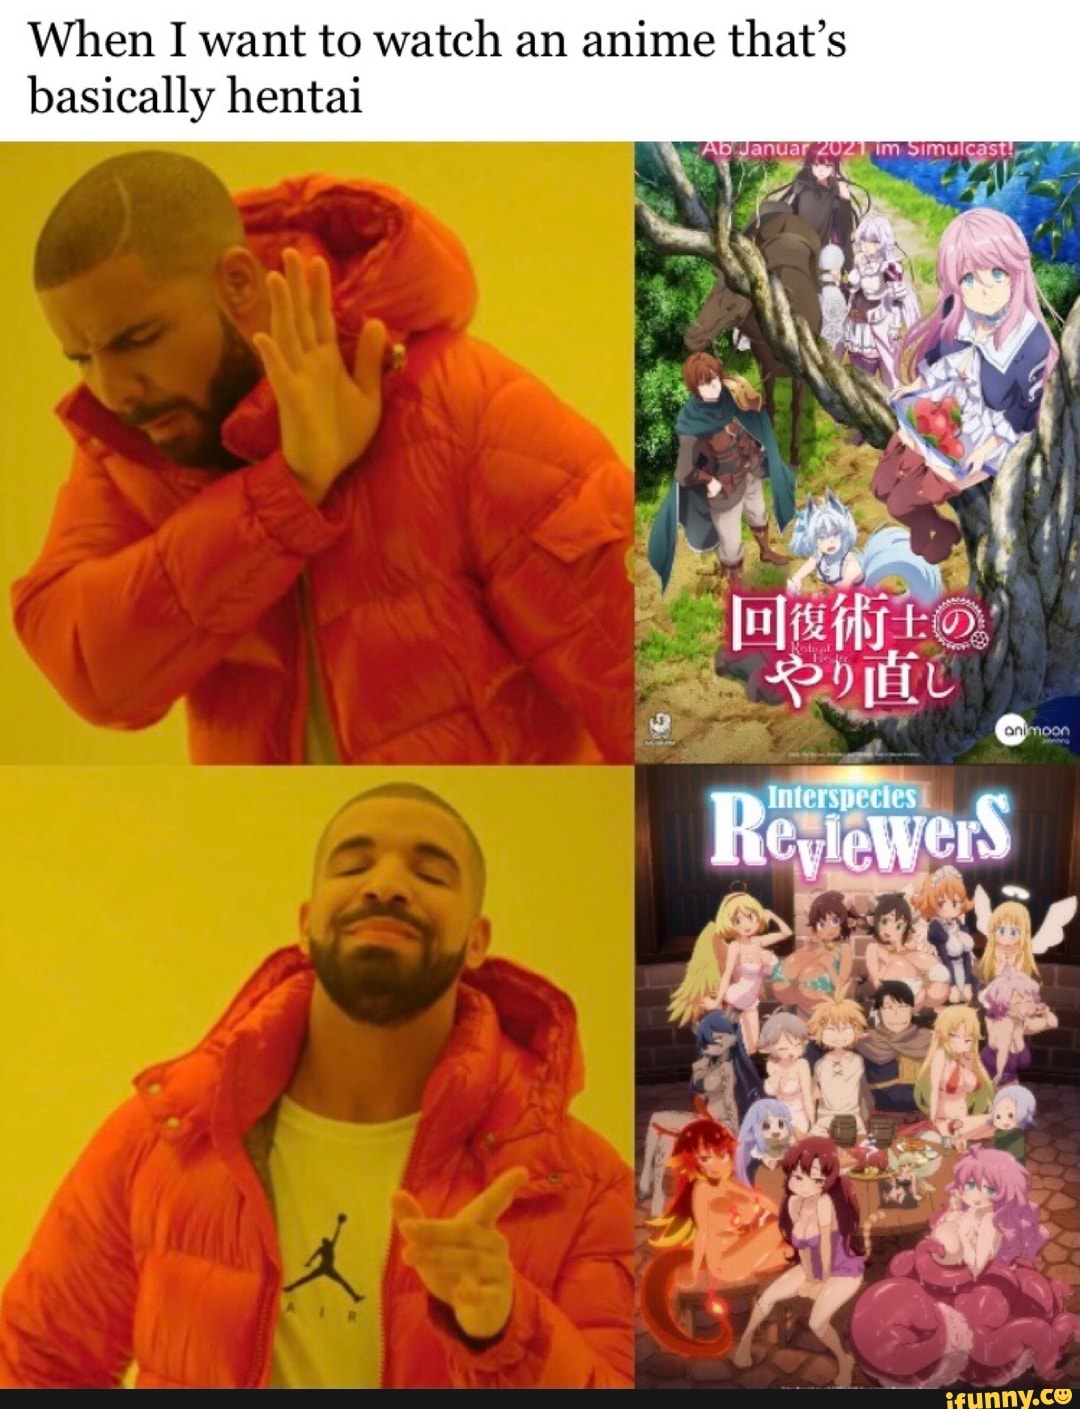 Anime thats basically hentai